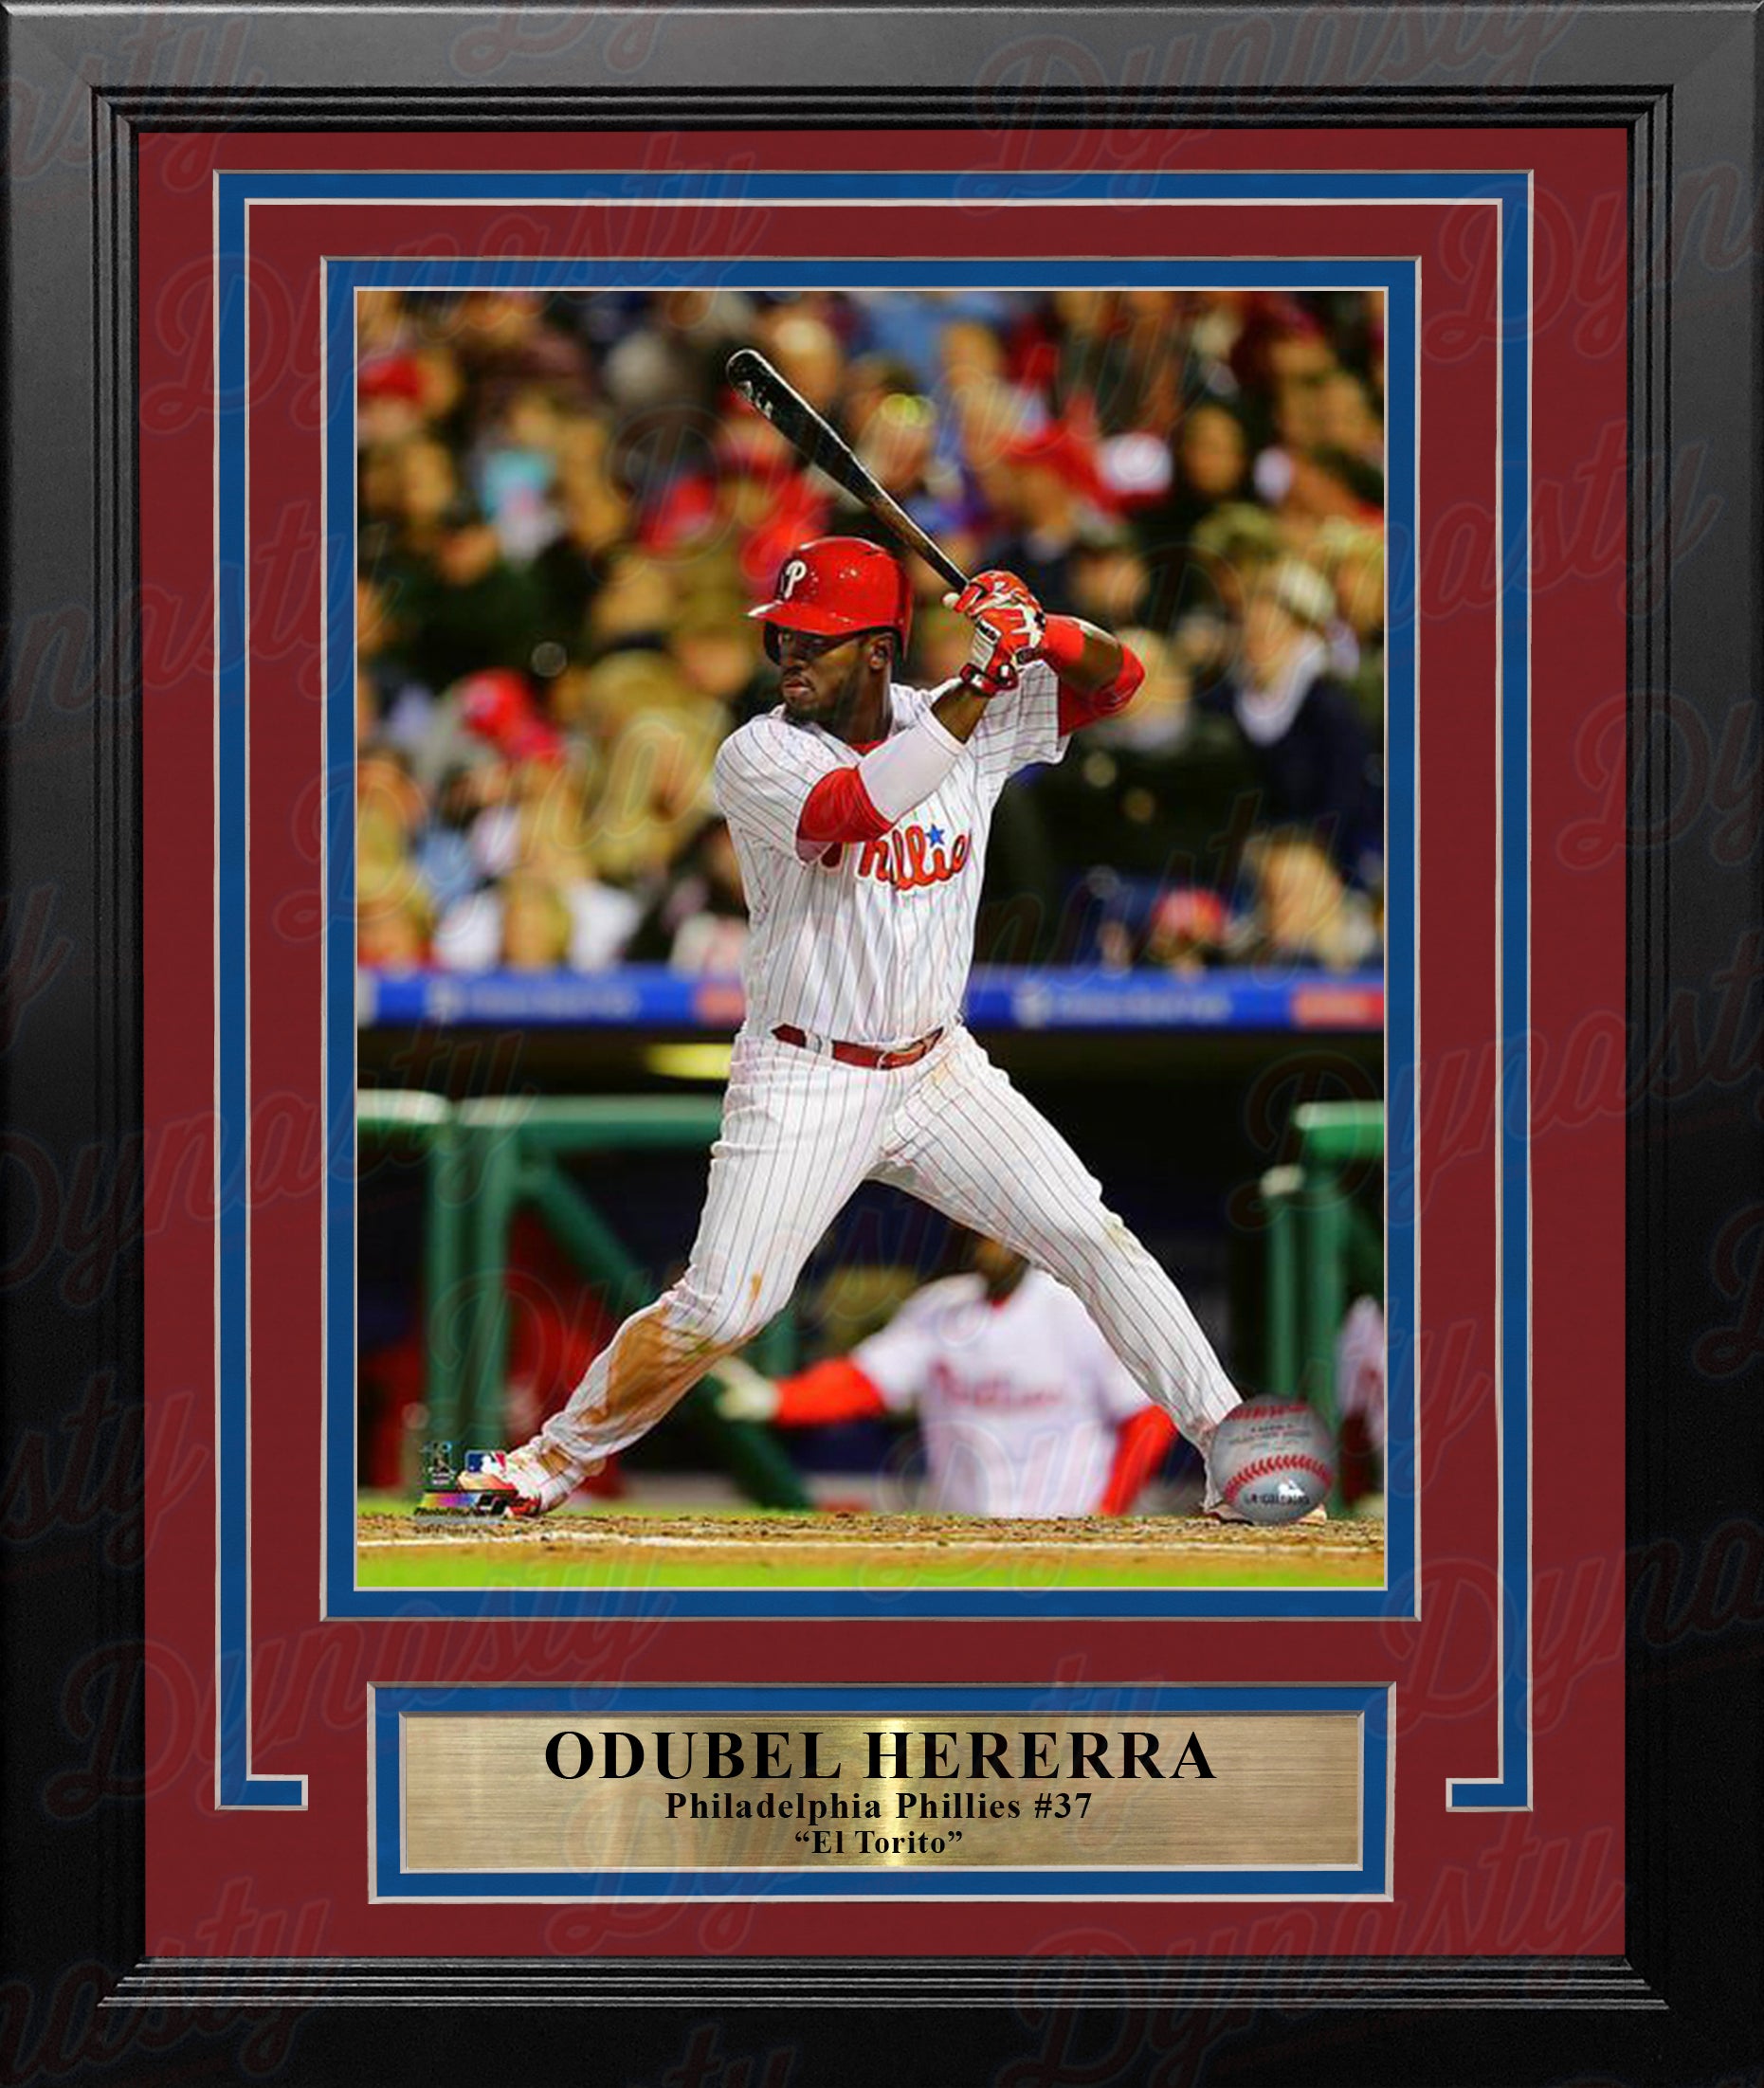 Odubel Herrera Philadelphia Phillies At-Bat MLB Baseball Framed and Matted Photo - Dynasty Sports & Framing 